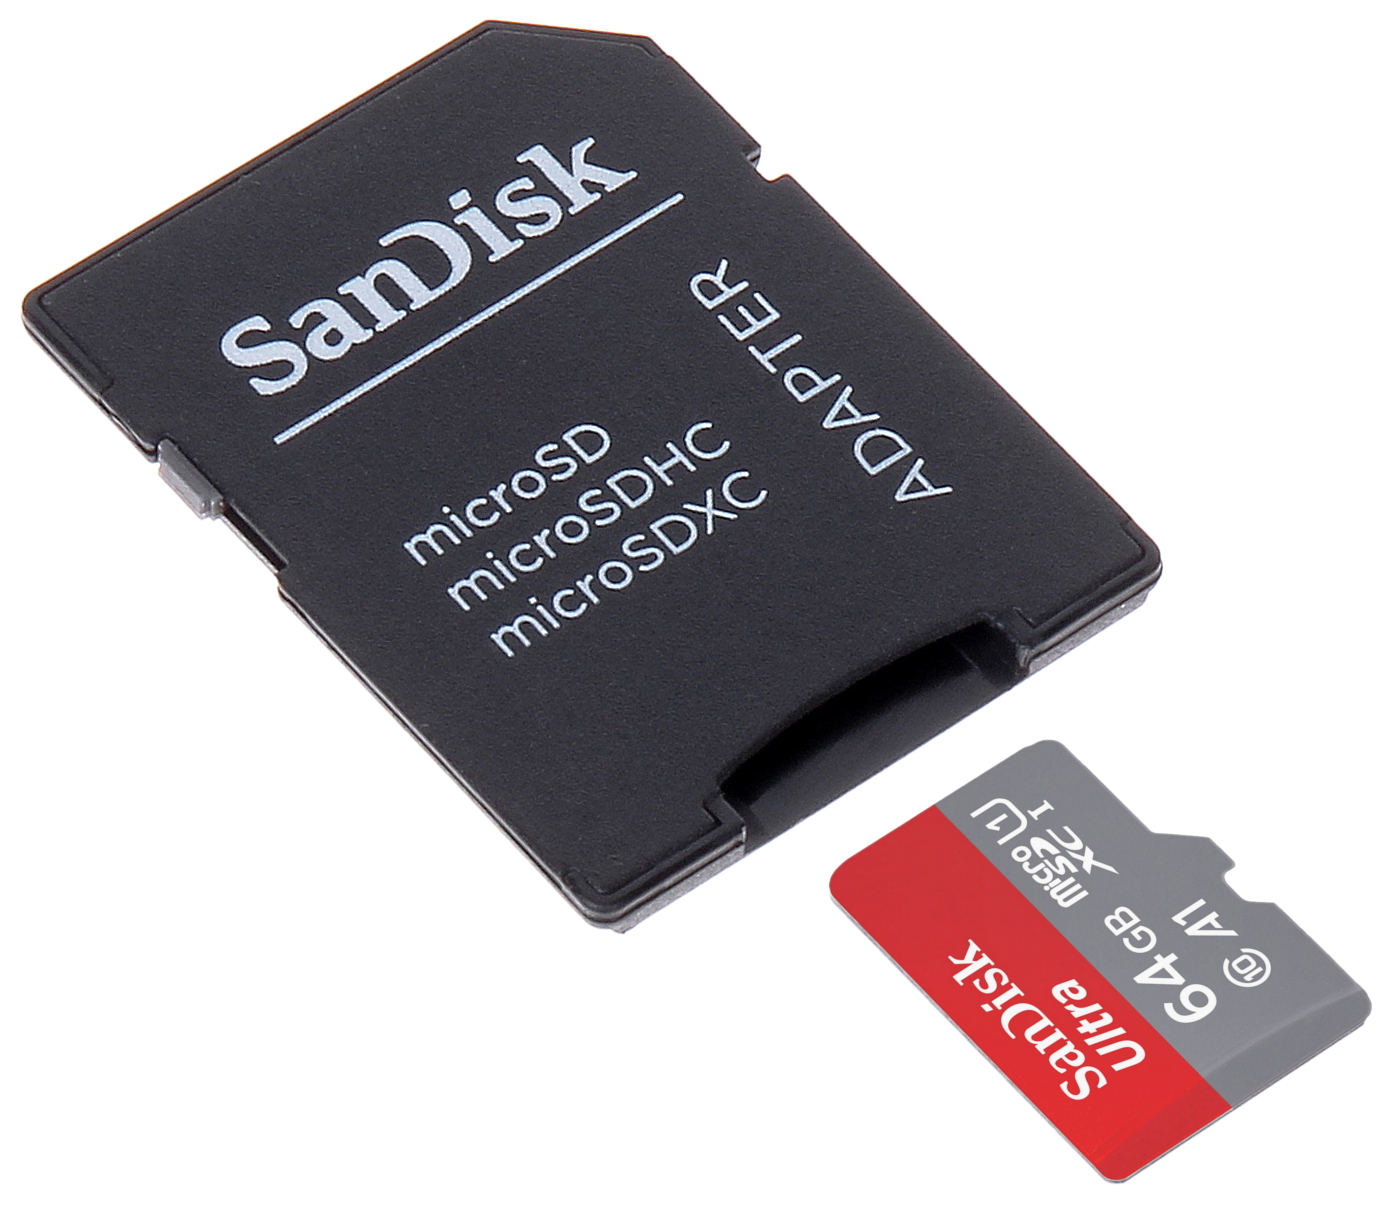 4x 64gb ultra TF card SD-tarjeta memory card Micro SDHC class 10 80mb/s Kootion